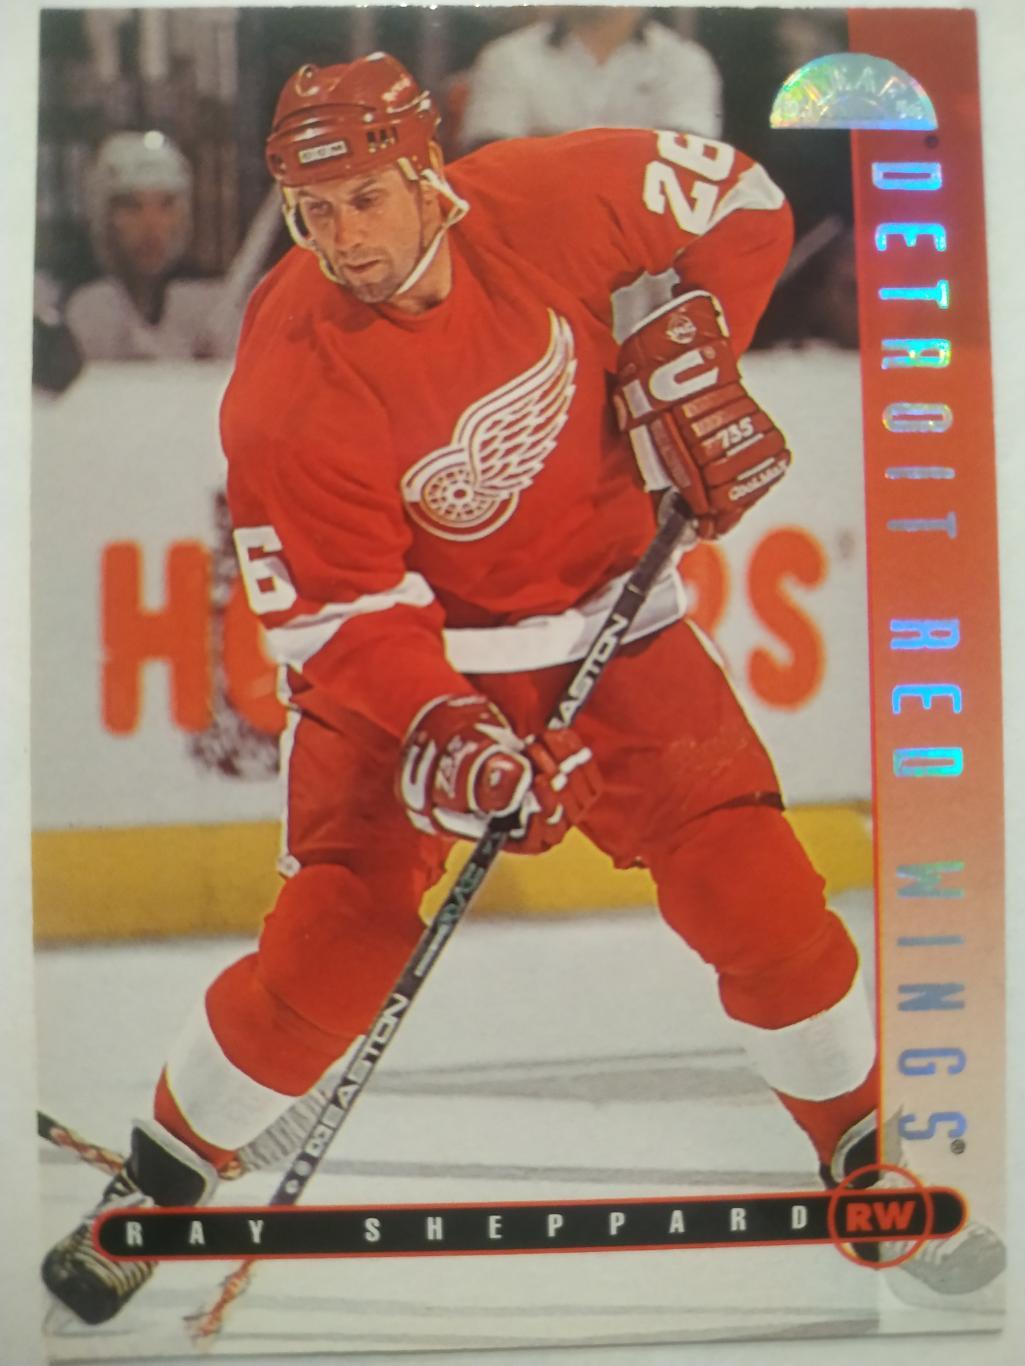 ХОККЕЙ КАРТОЧКА НХЛ DONRUSS LEAF 1995-96 RAY SHEPPARD DETROIT RED WINGS #118